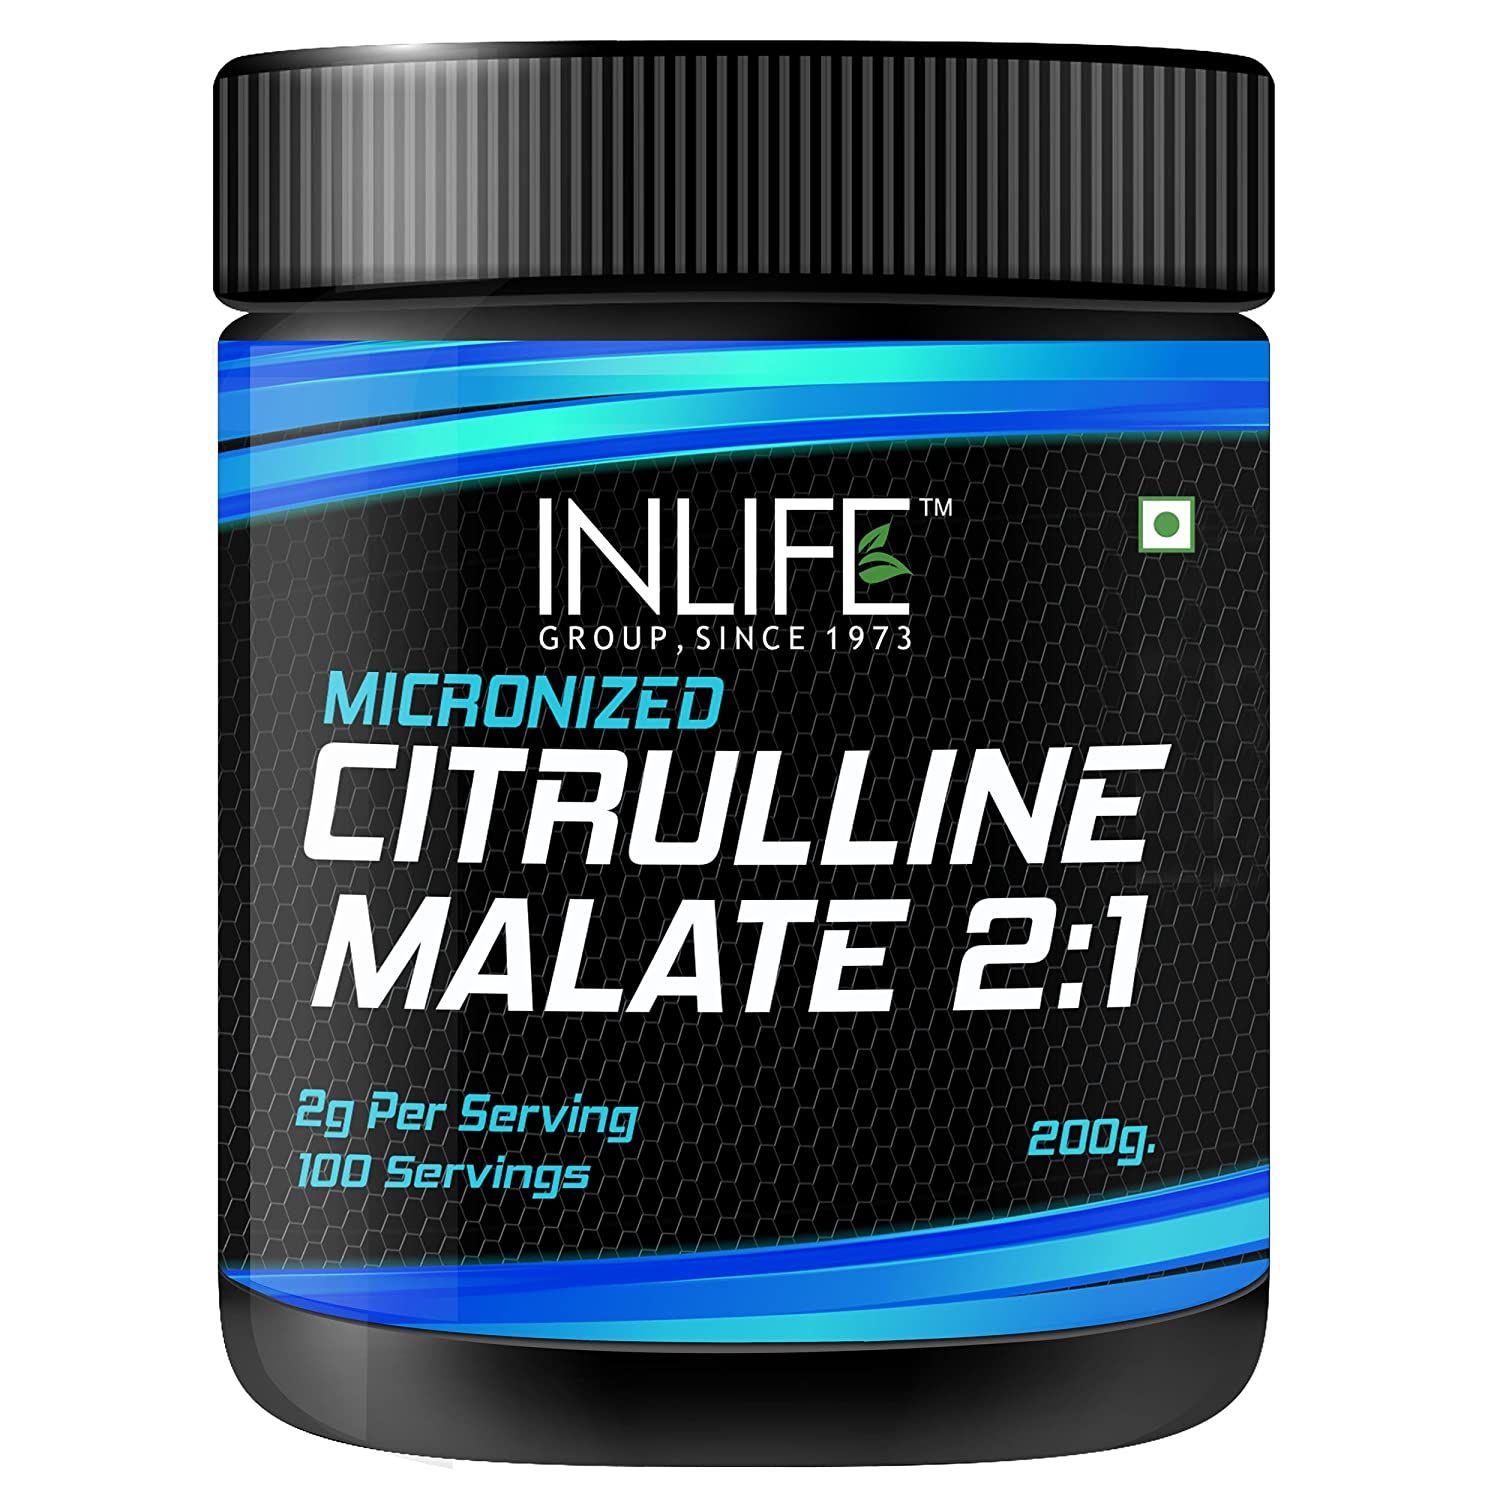 Inlife Micronized Citrulline Malate Powder Image